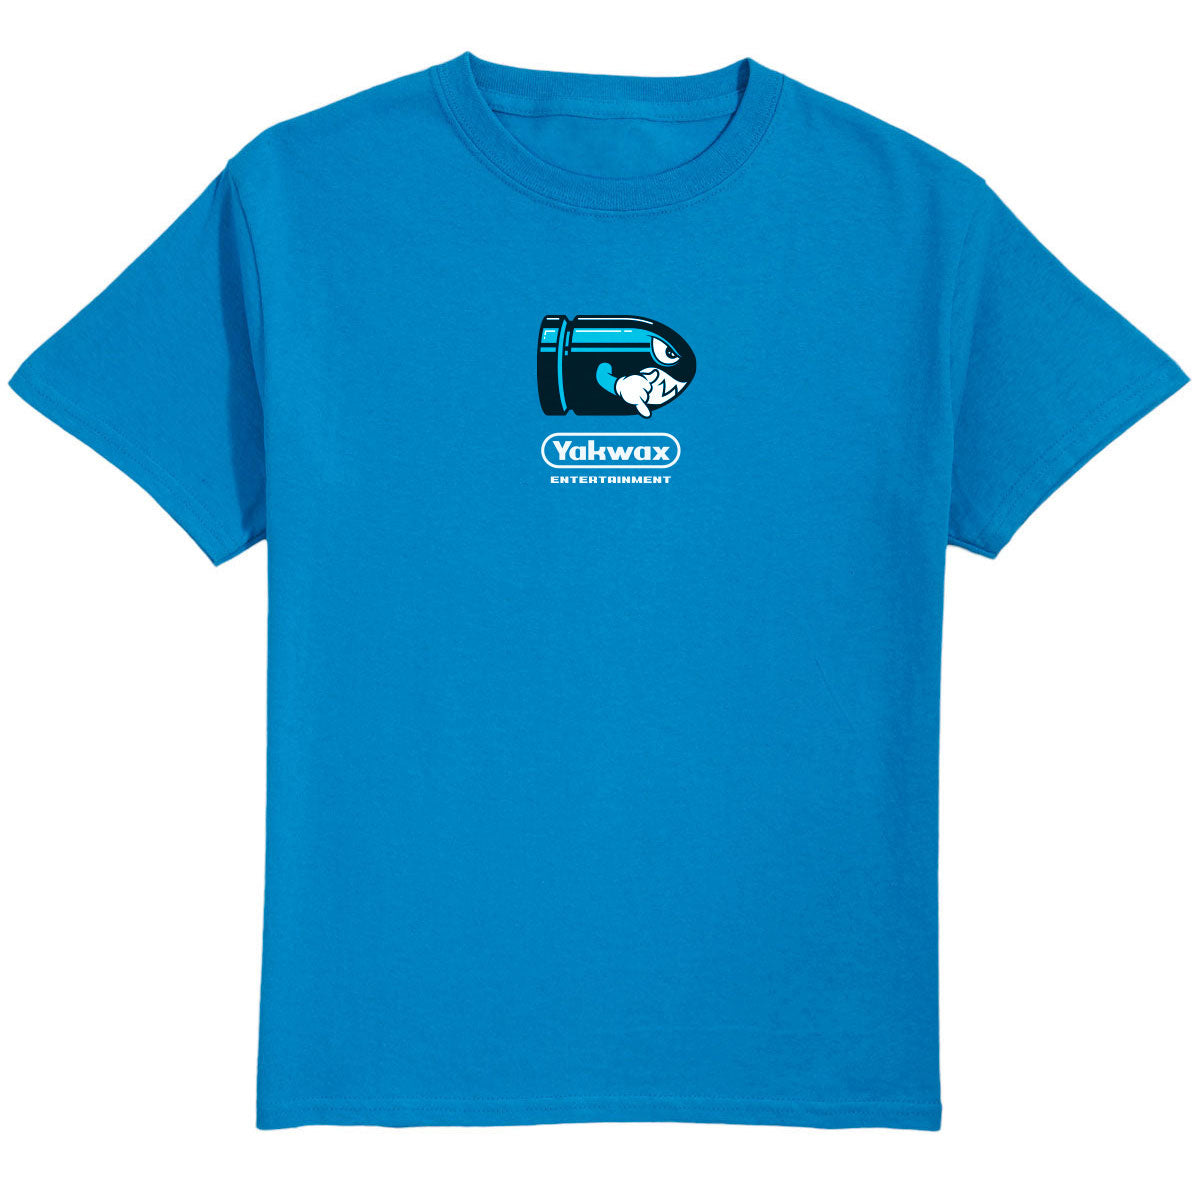 Yakwax Kids Bullet T-Shirt - Blue - Boys Surf Brand T-Shirt by Yakwax